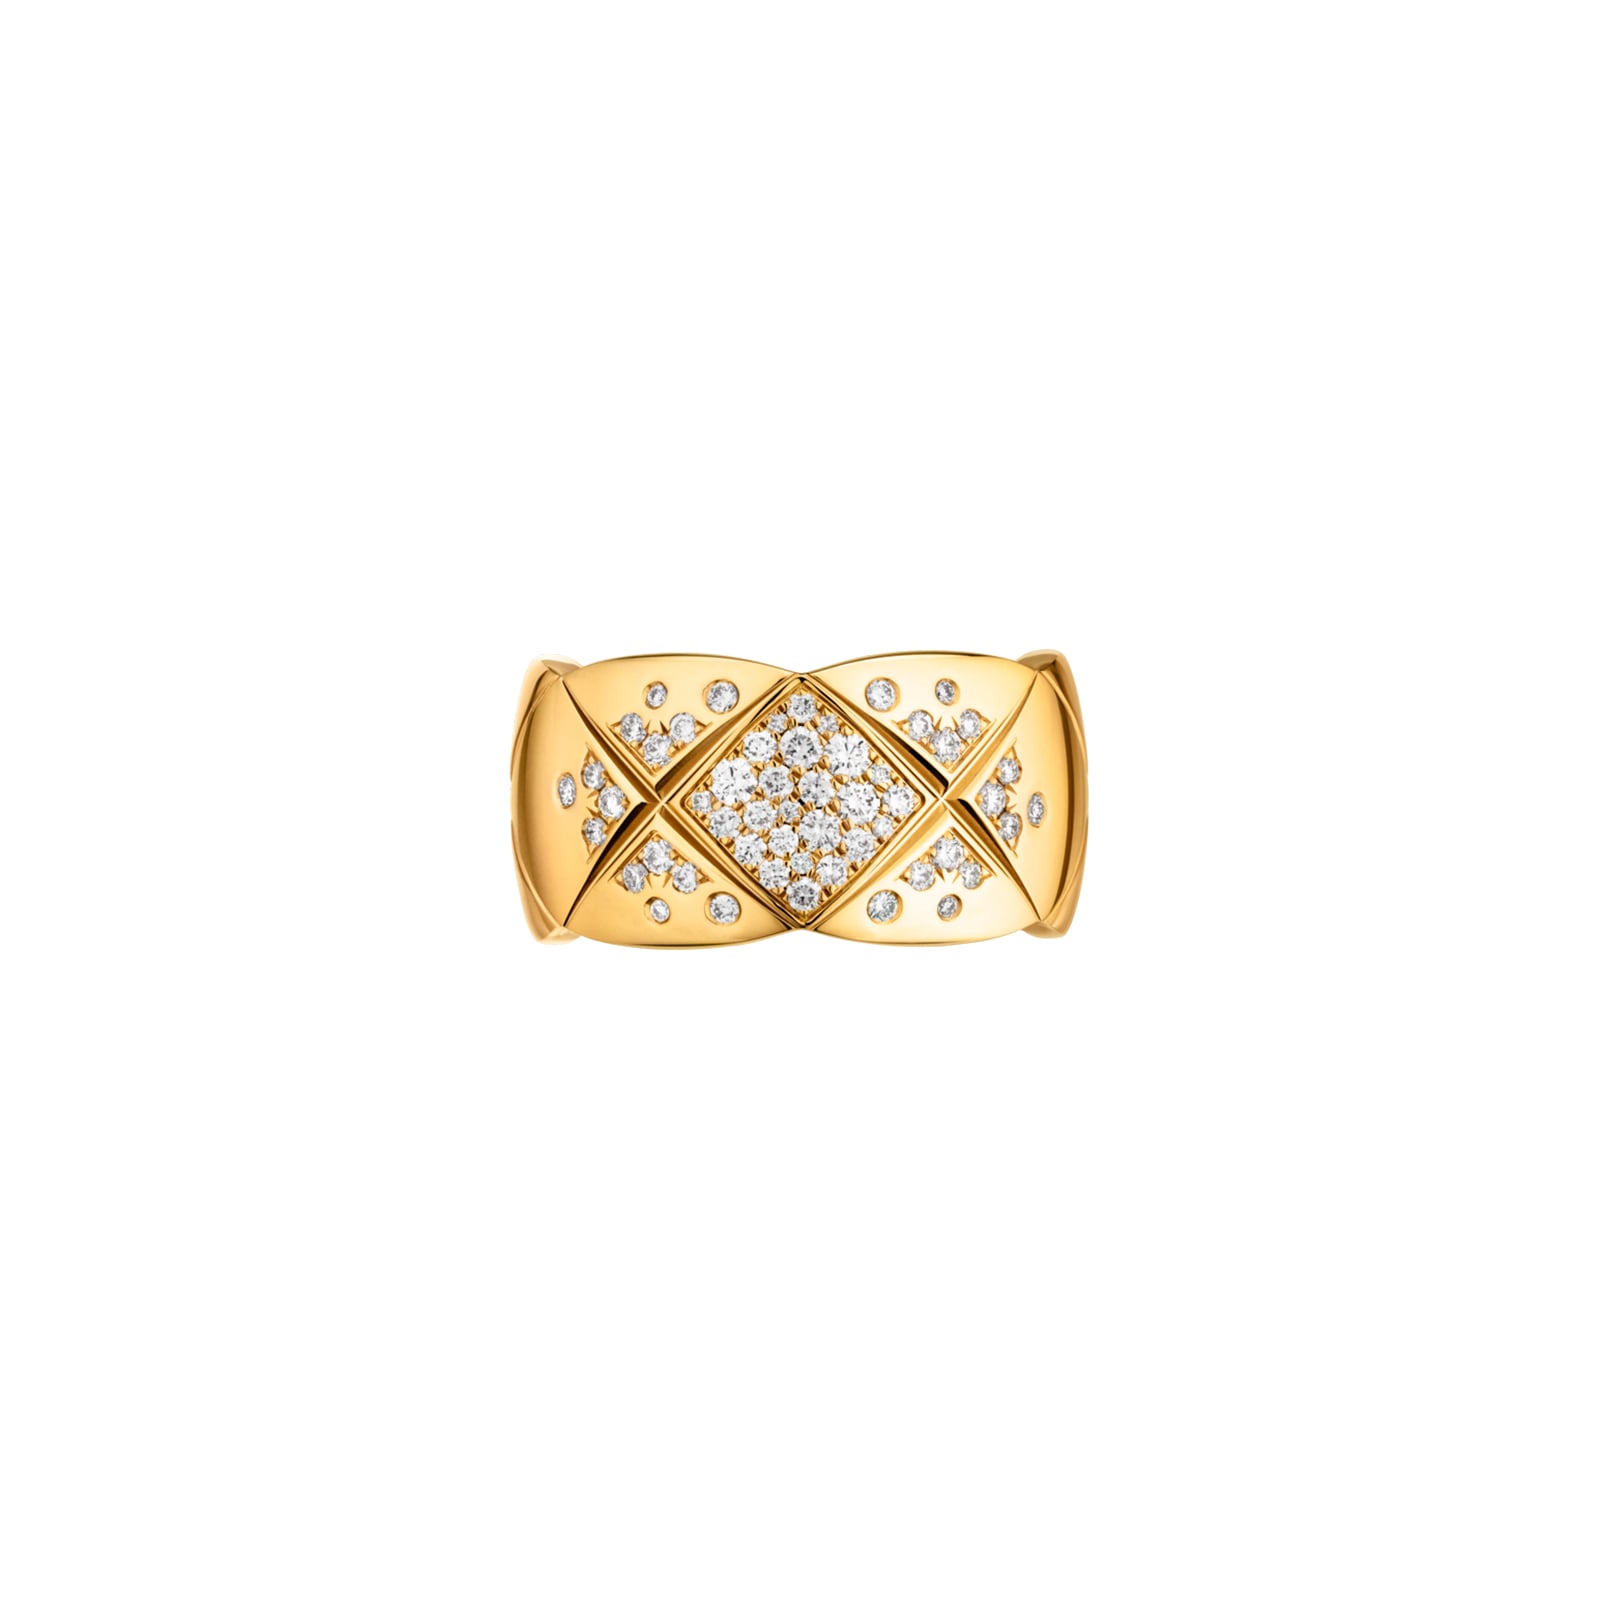 Chanel Jewelry 18k Yellow Gold 0.46cttw Diamond Coco Crush Large